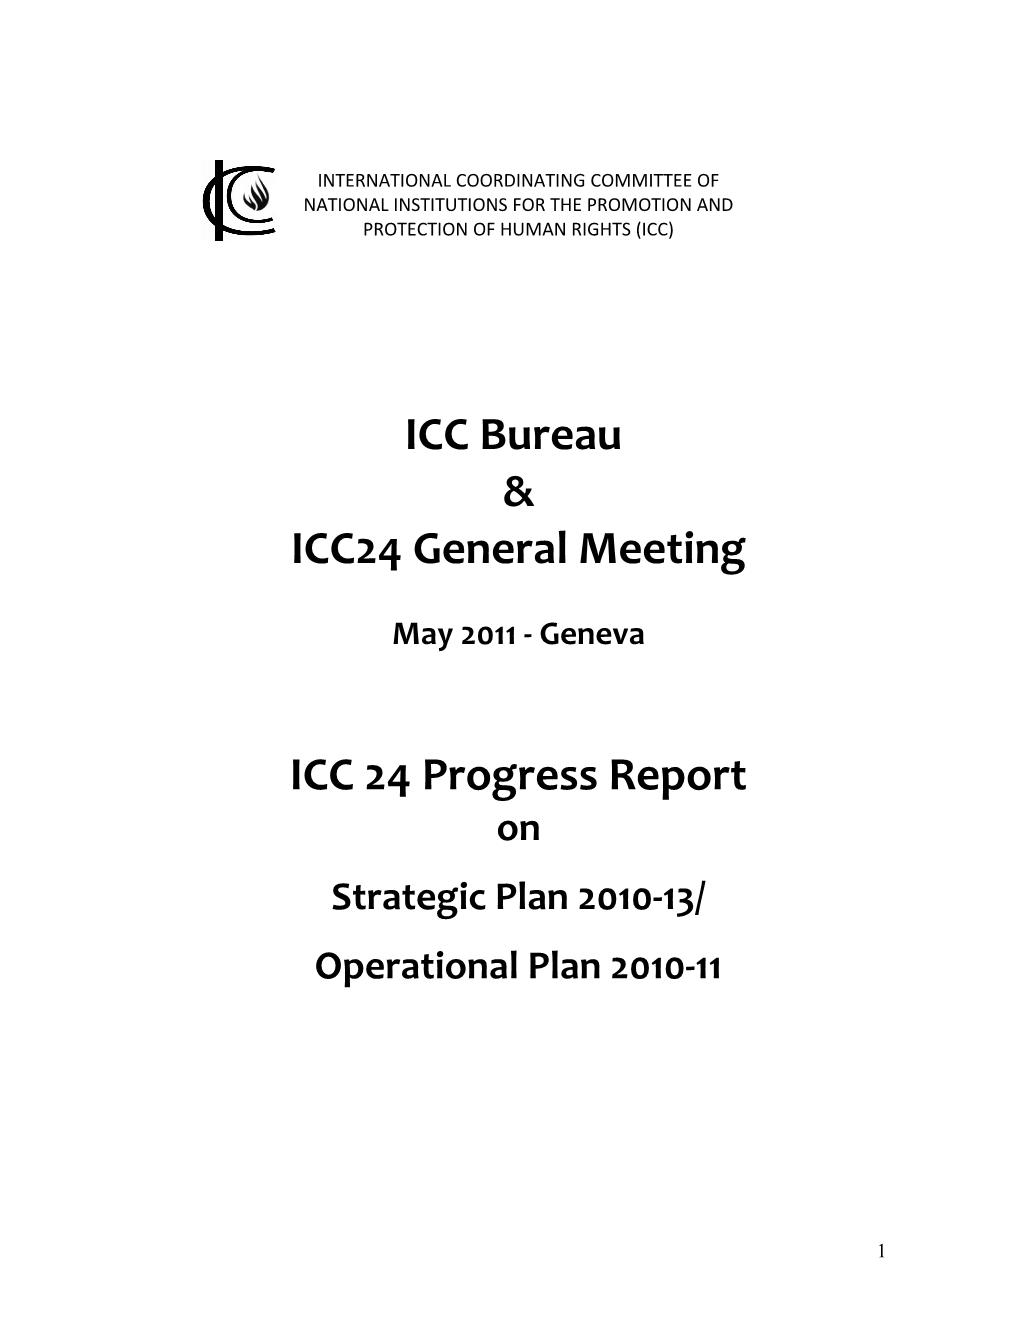 ICC 24 Progress Report on Strategic Plan 2010 - 2013